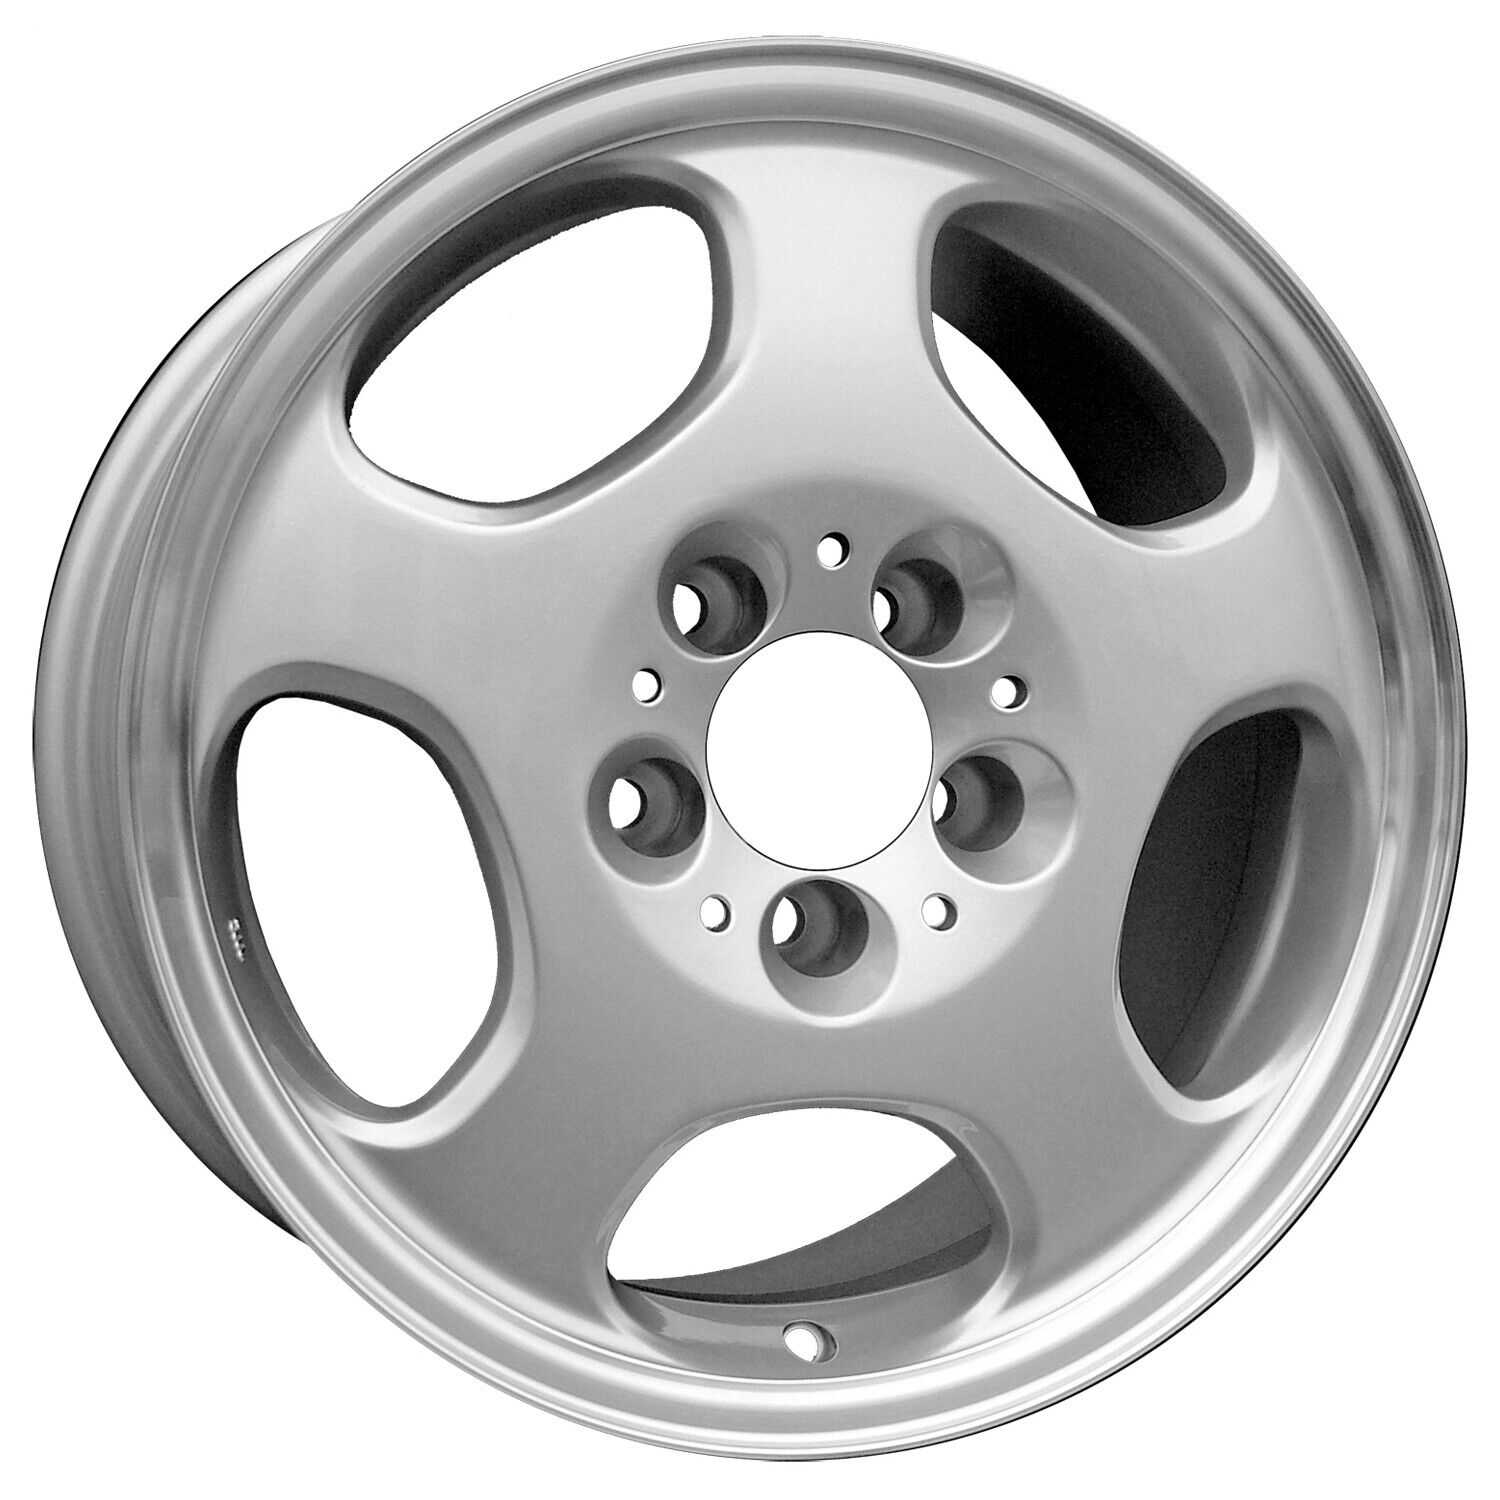 65237 Reconditioned OEM Aluminum Wheel 17x7.5 fits 2000-2002 Mercedes E430